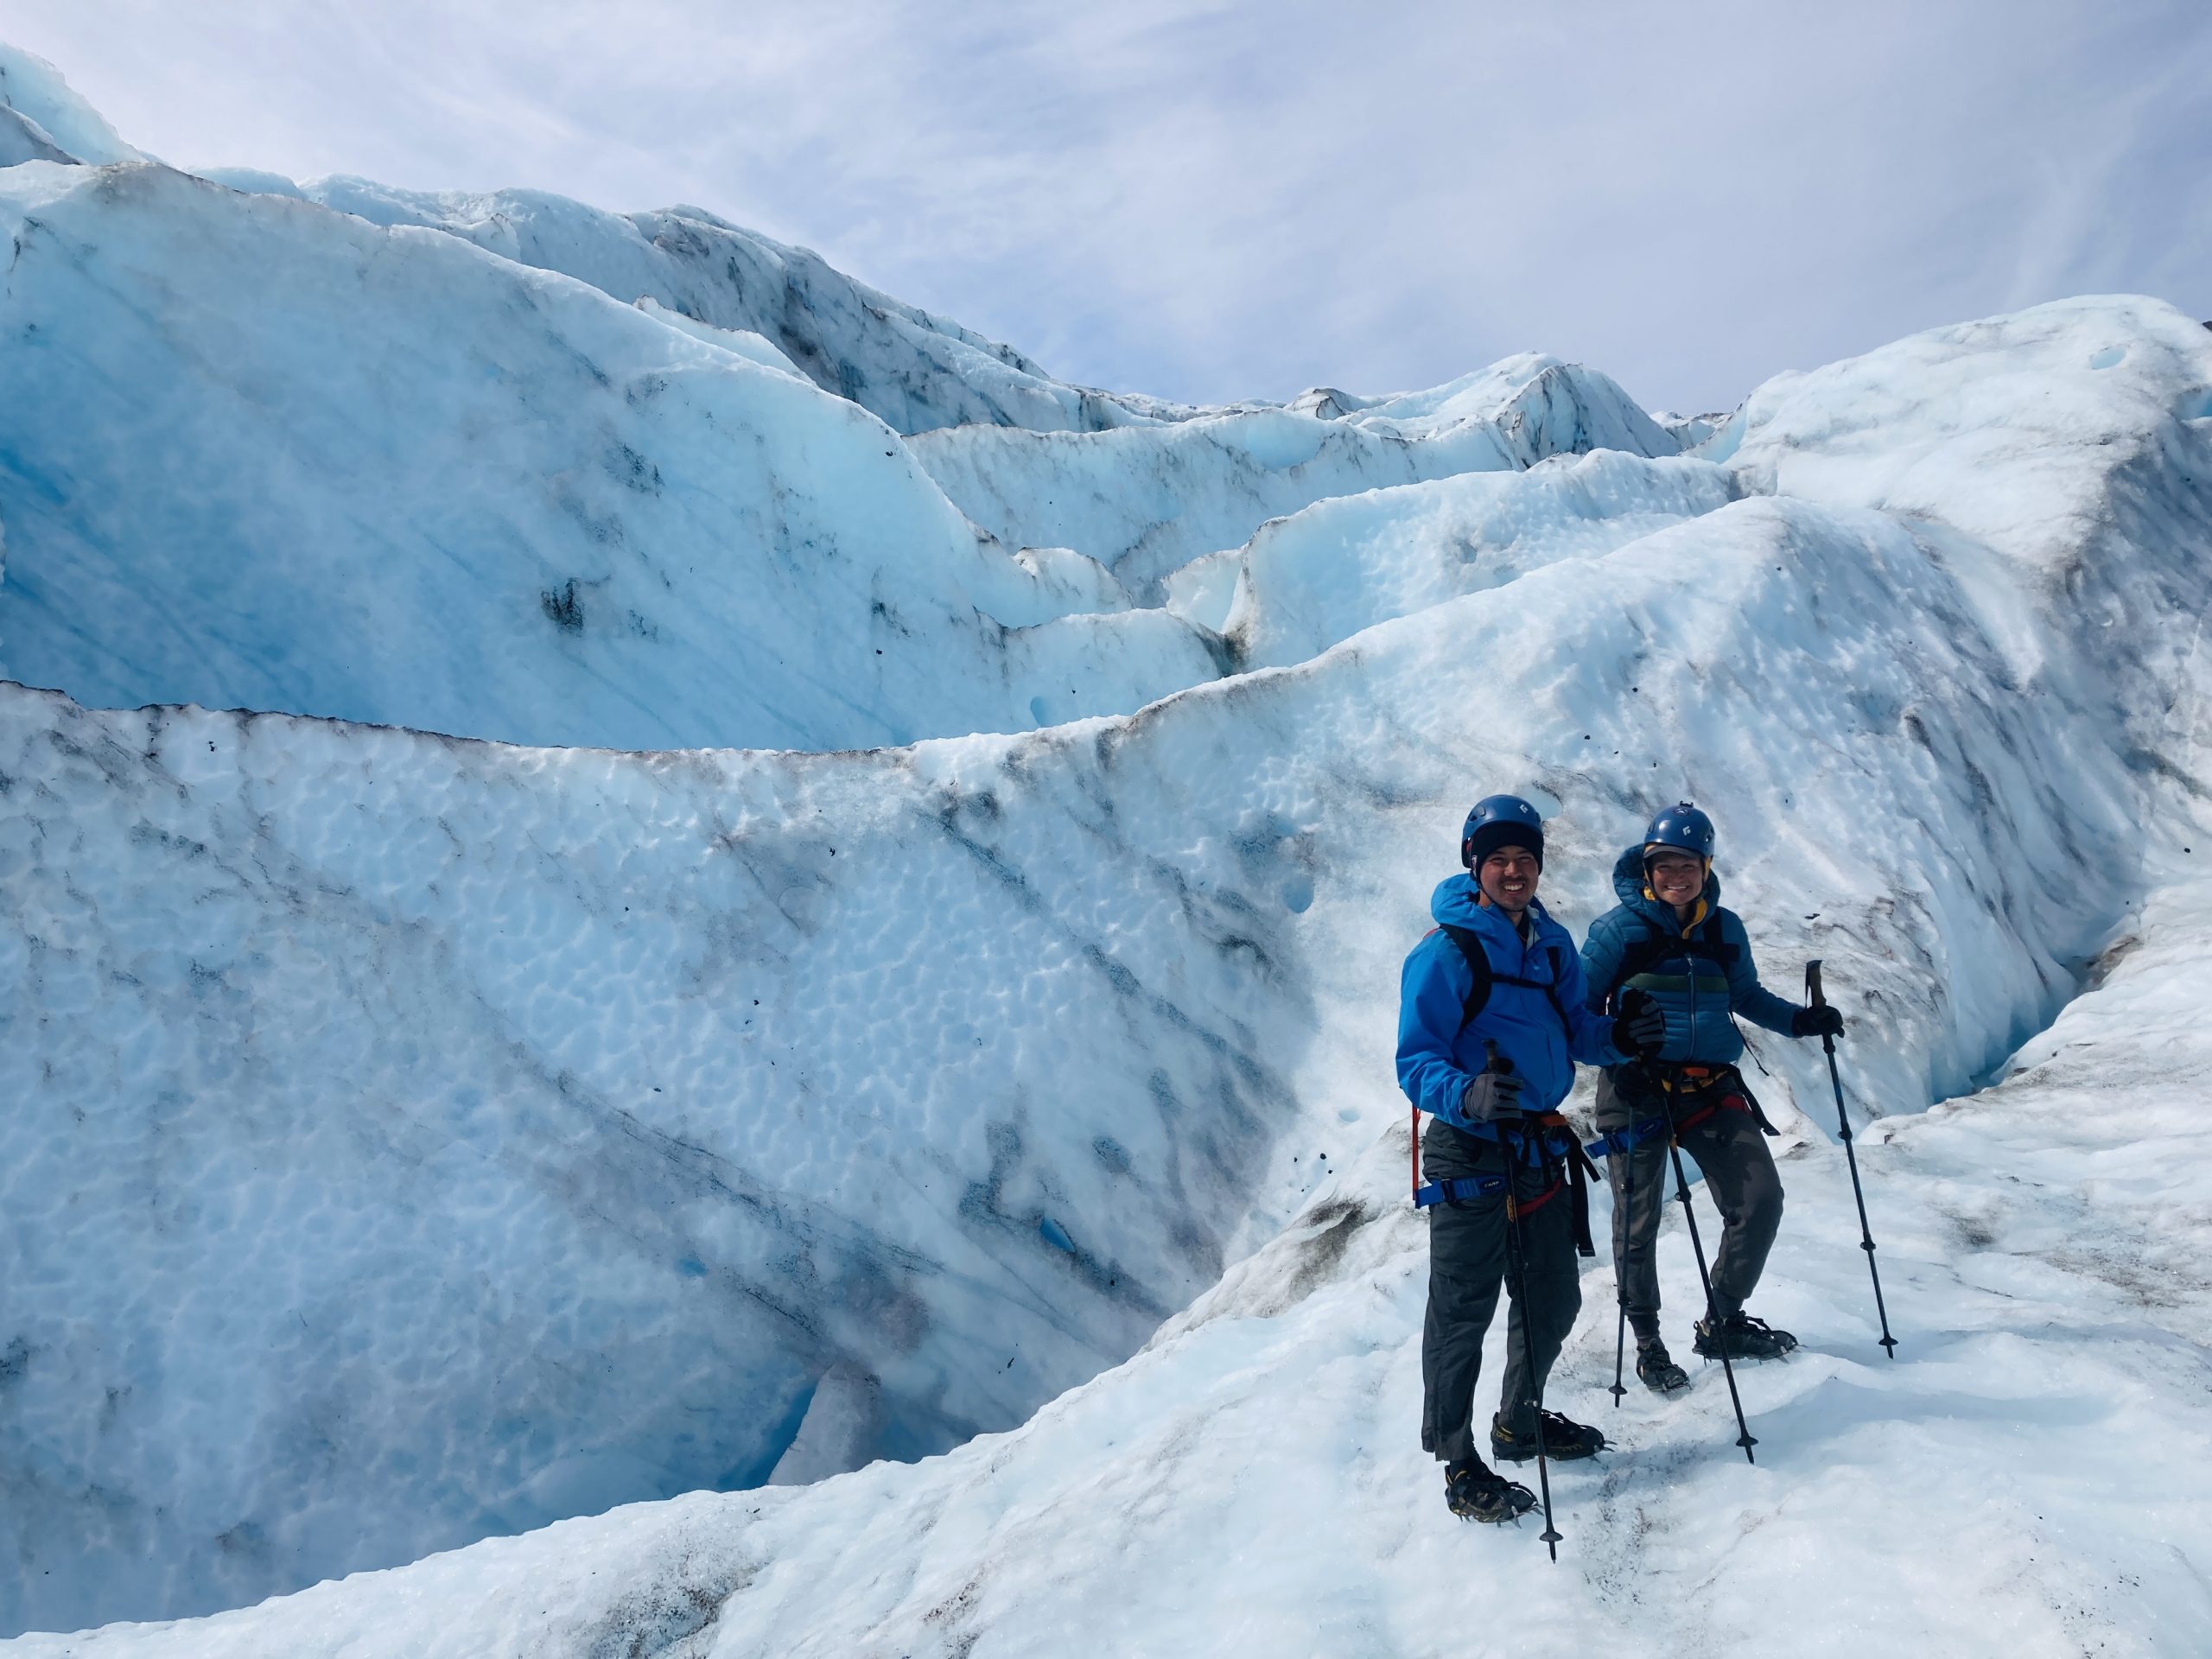 TRIP REPORT: 8/3/22 Exit Glacier Ice Hiking Adventure